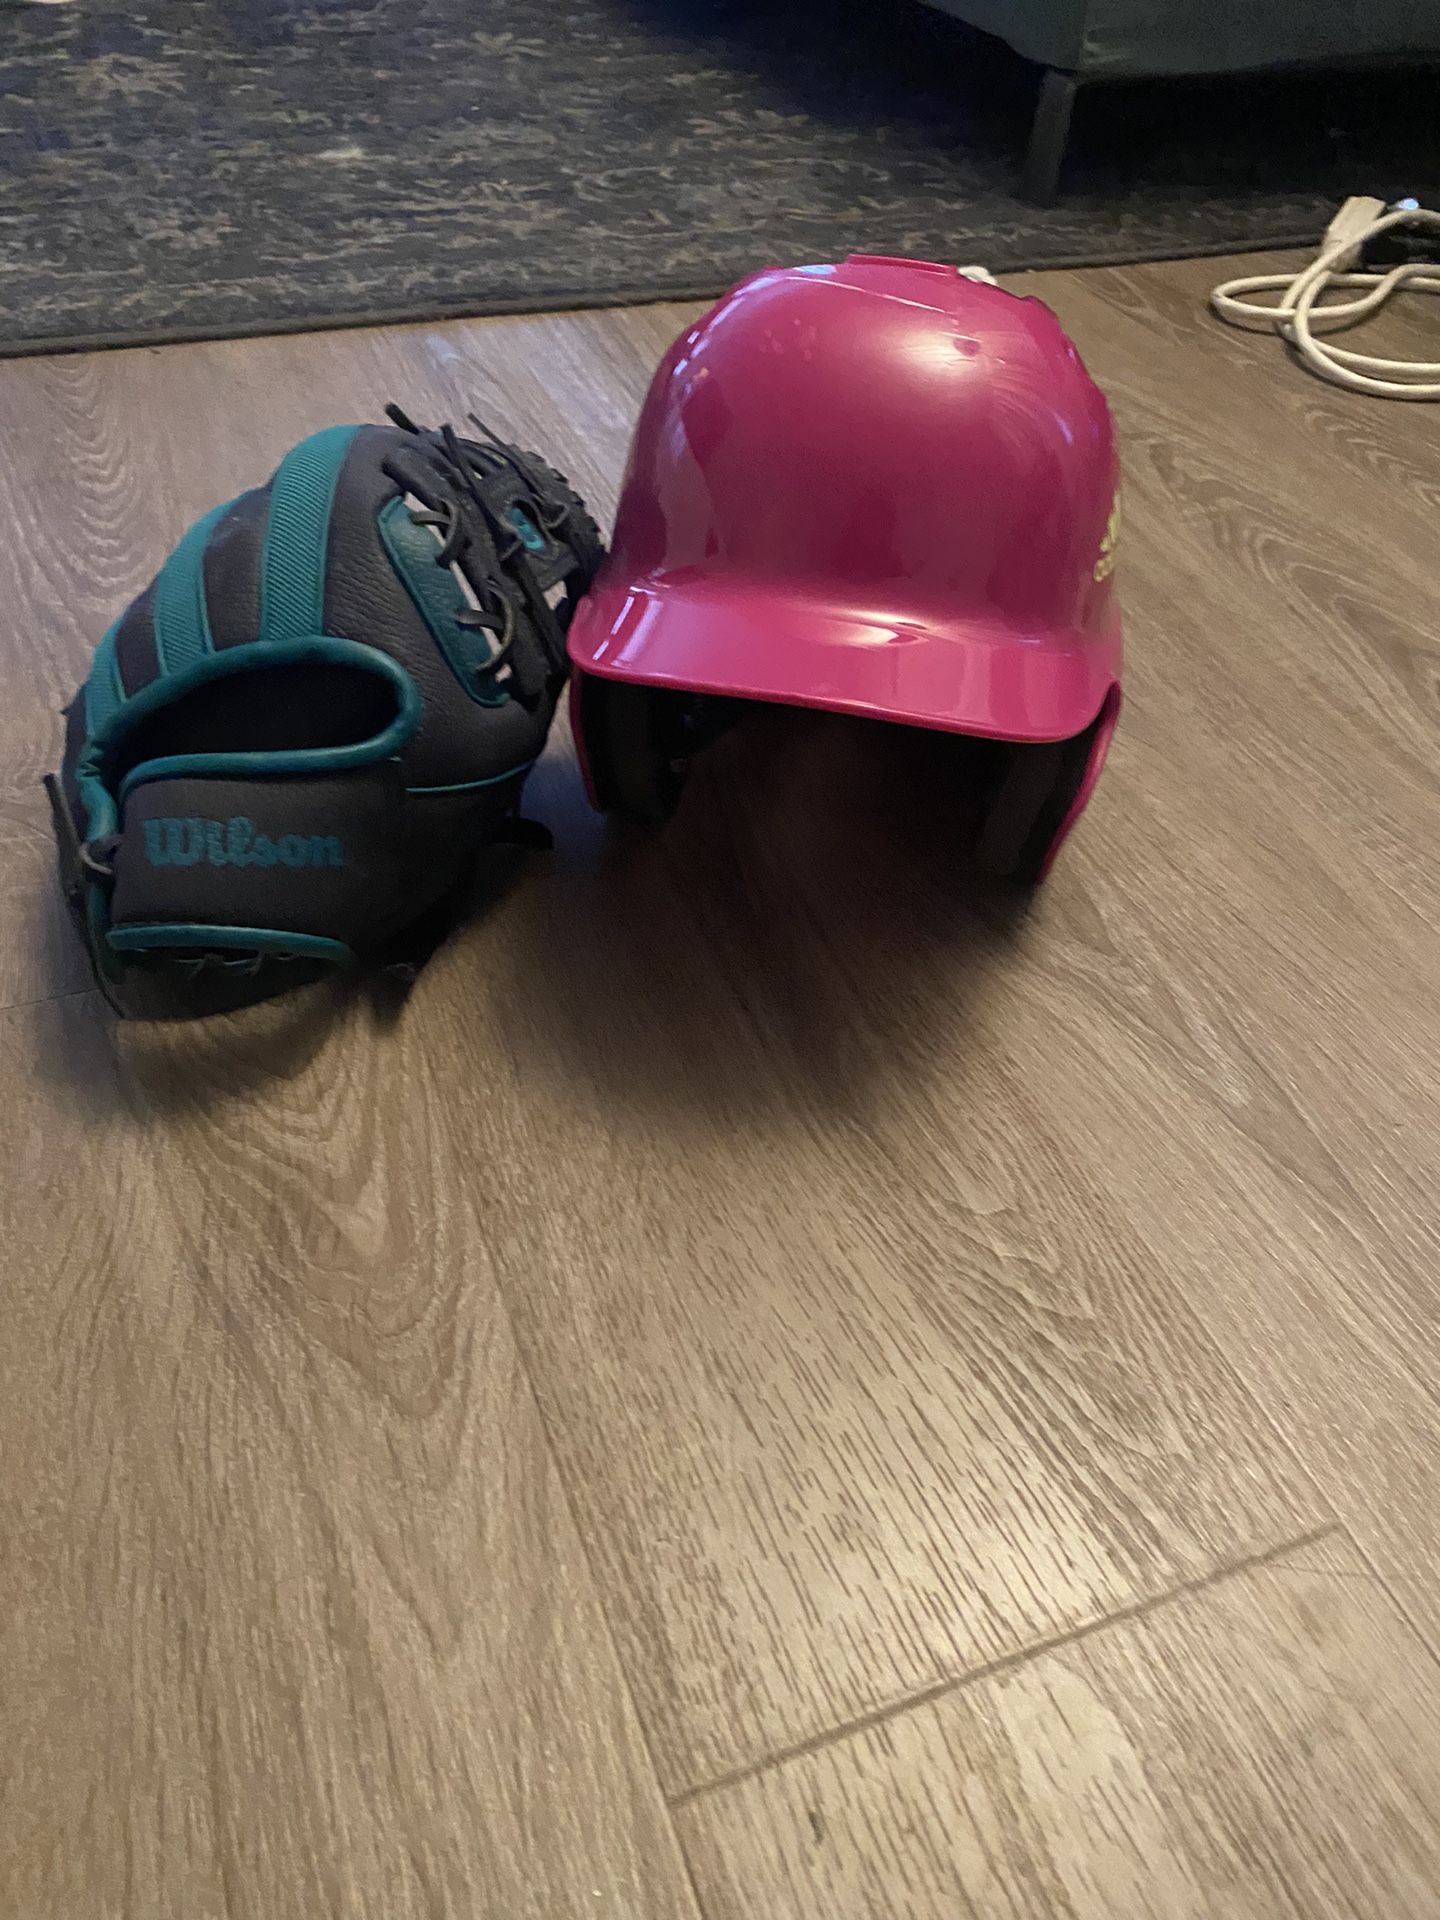 Tee Ball Glove And Helmet